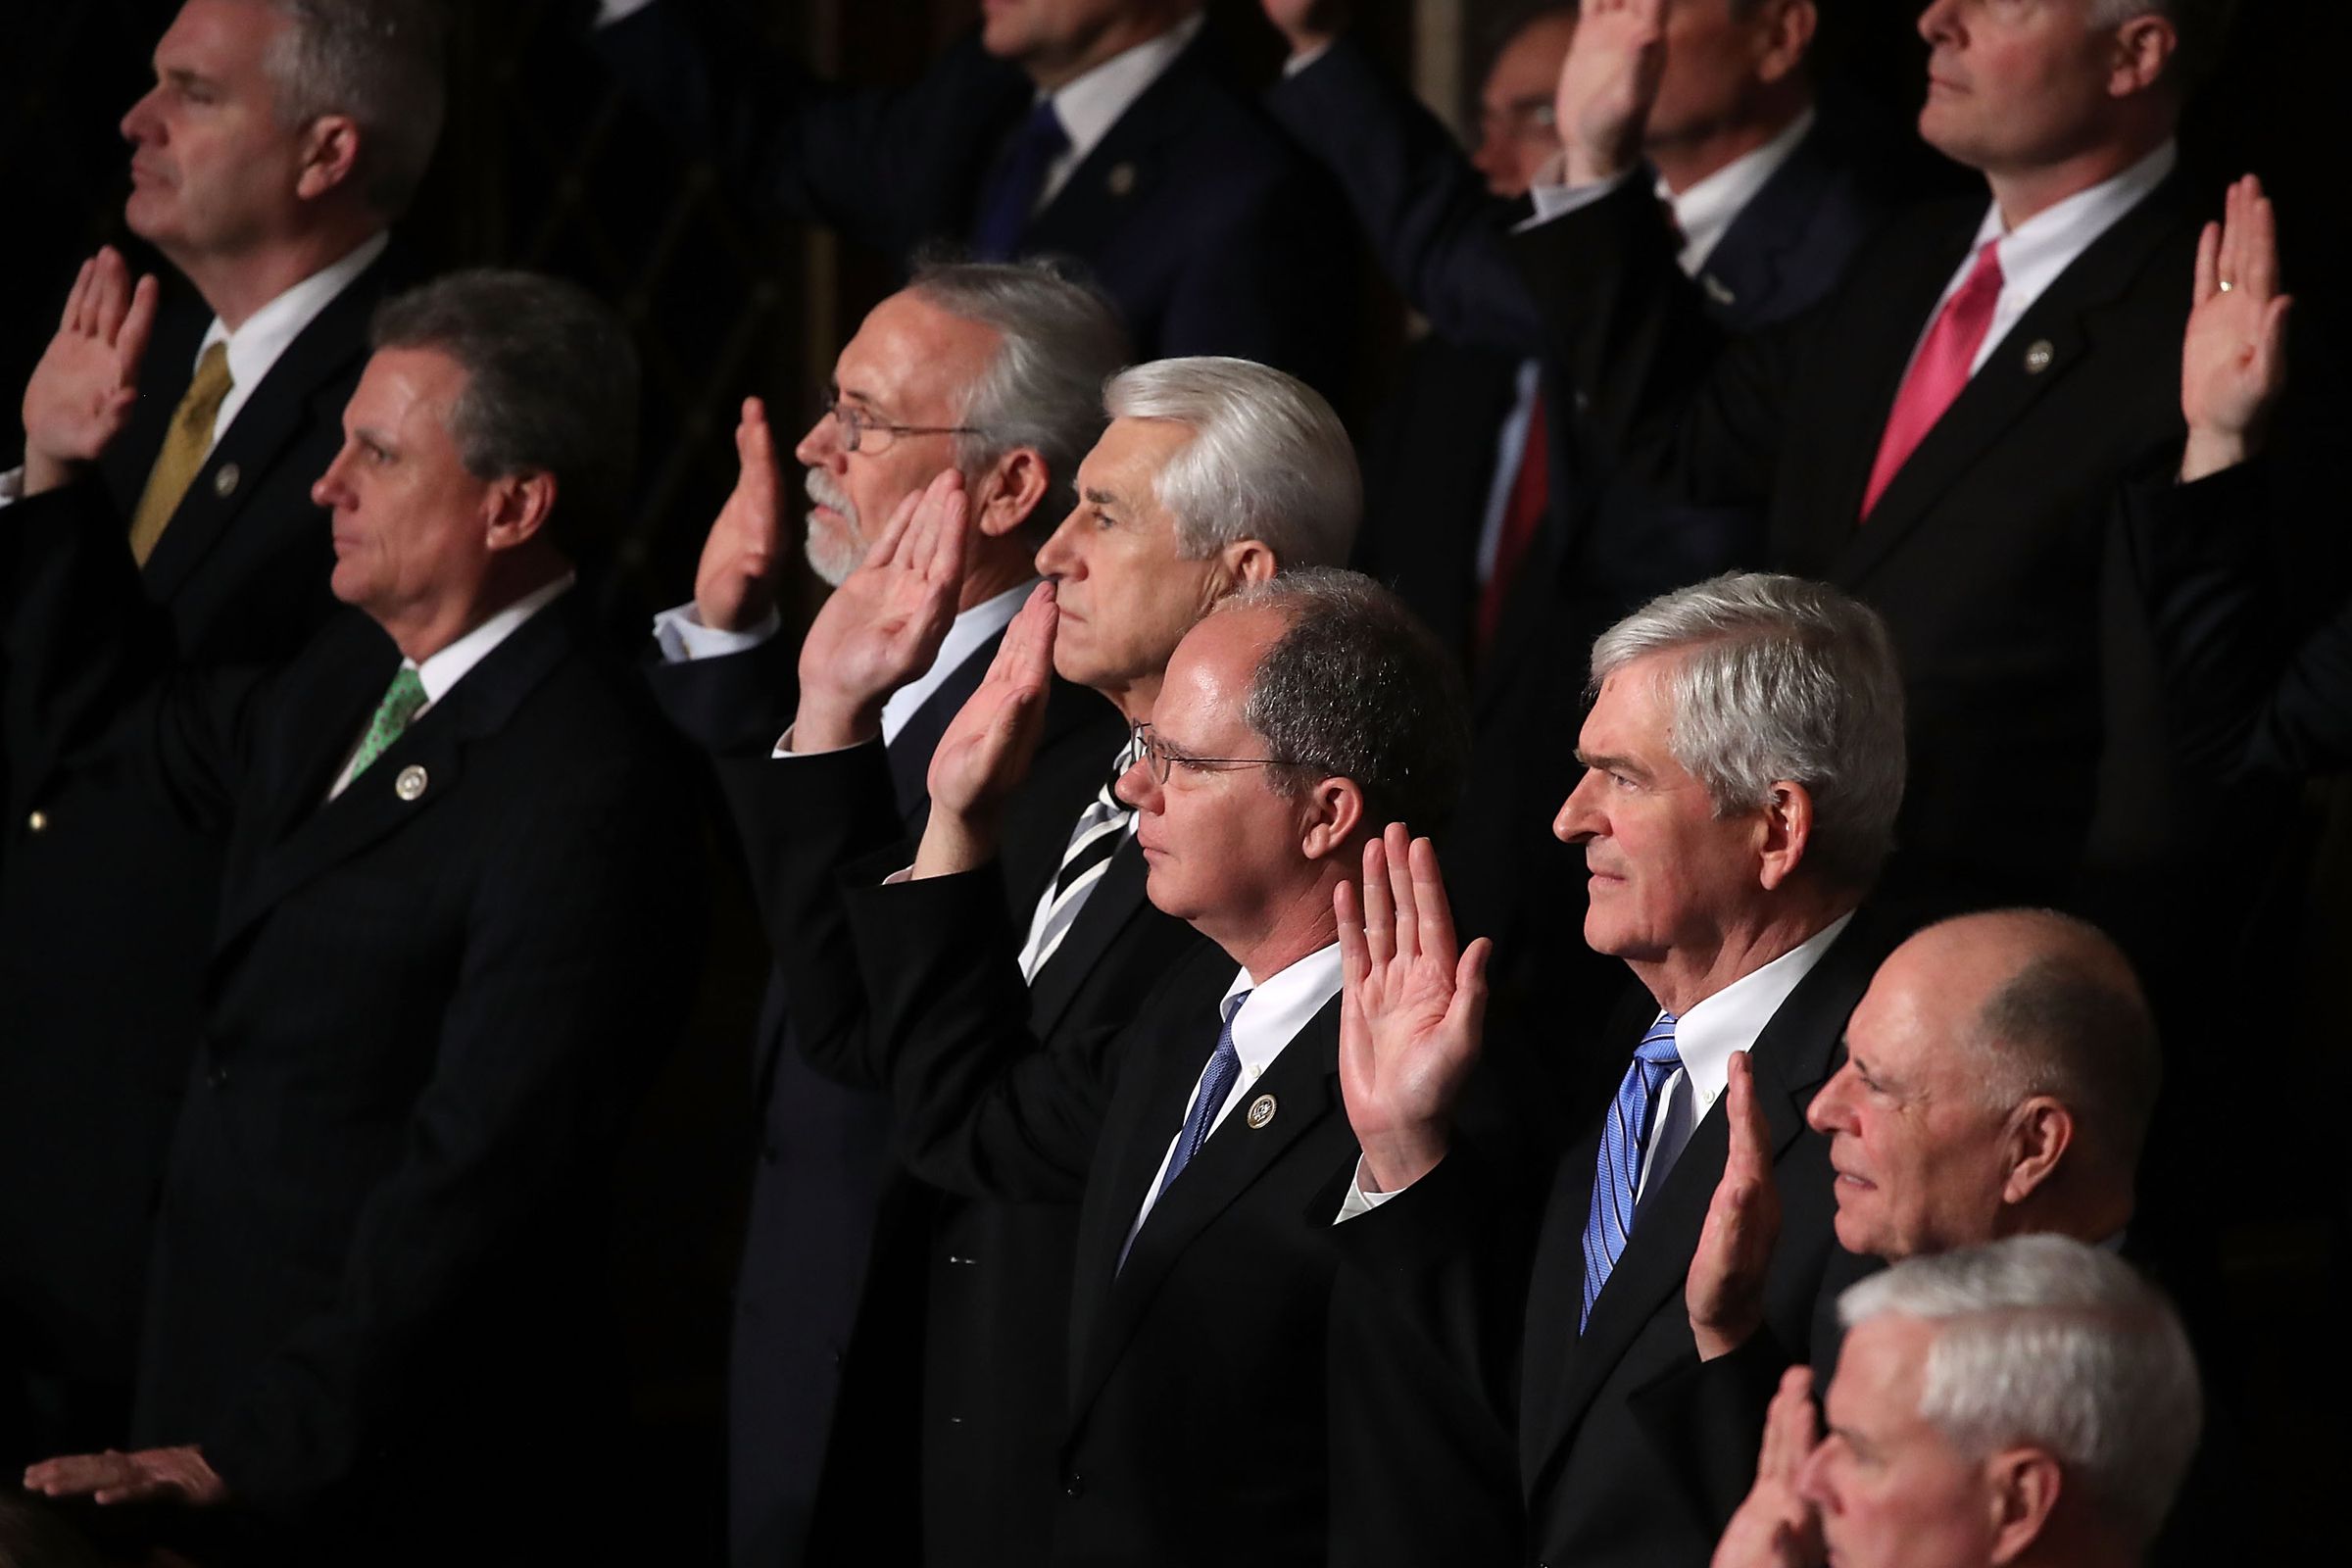 Paul Ryan Swears In Members Of The 115th Congress